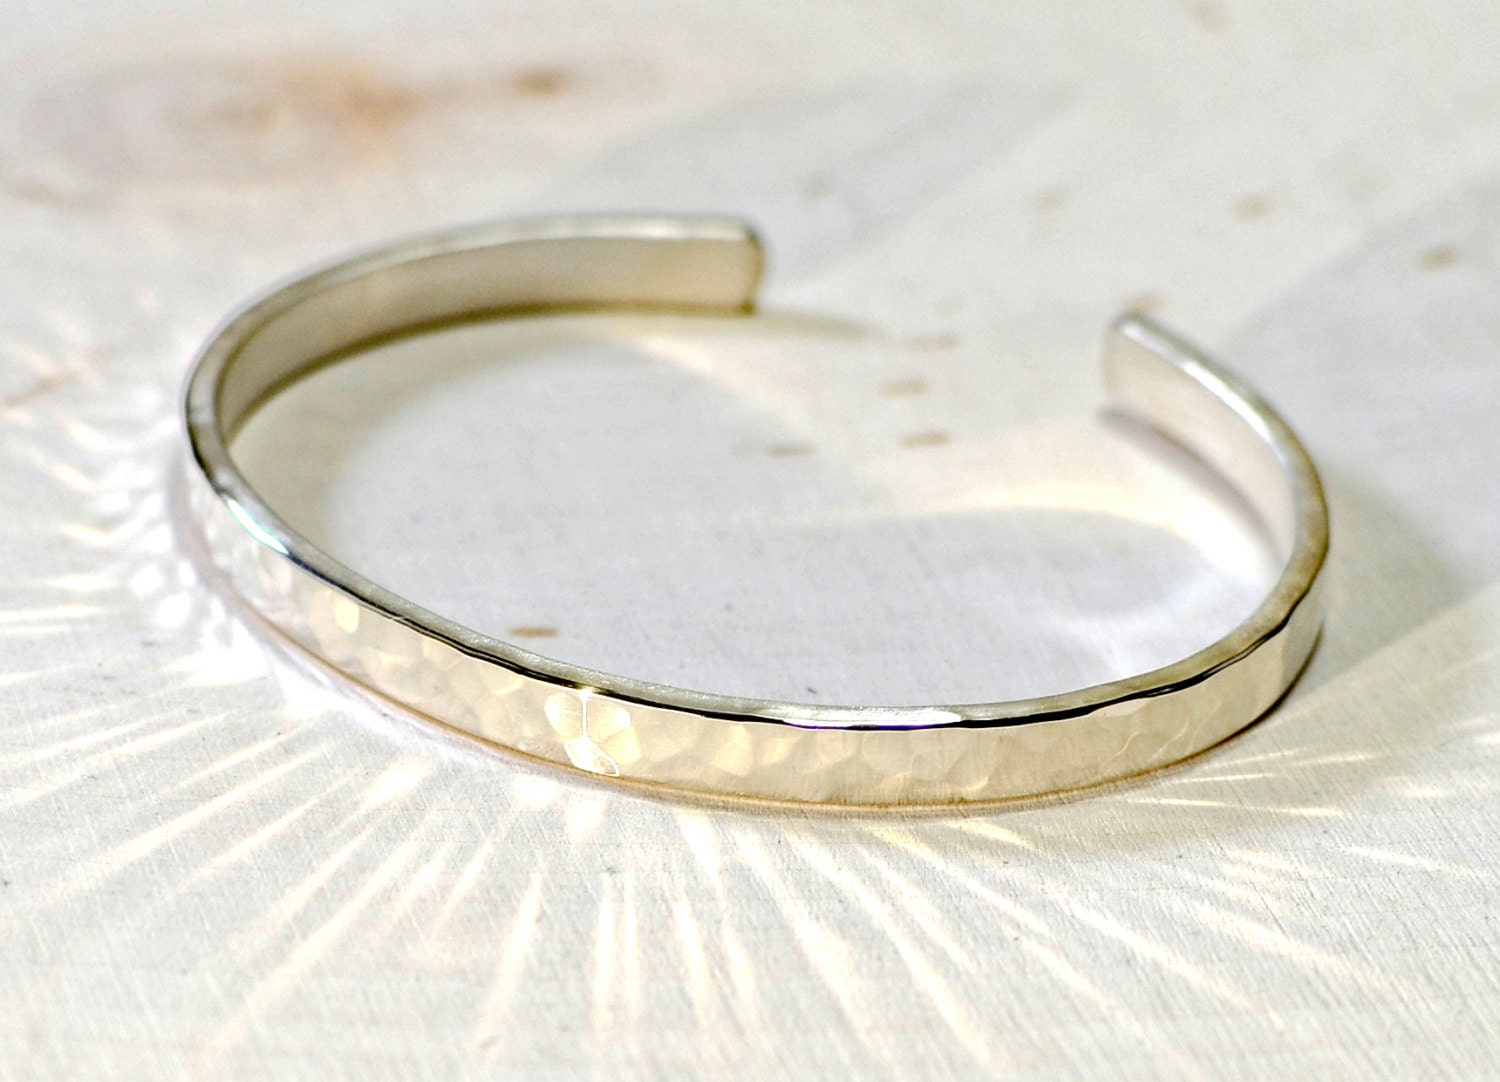 Hammered sterling silver cuff bracelet with elegant radiance | Etsy